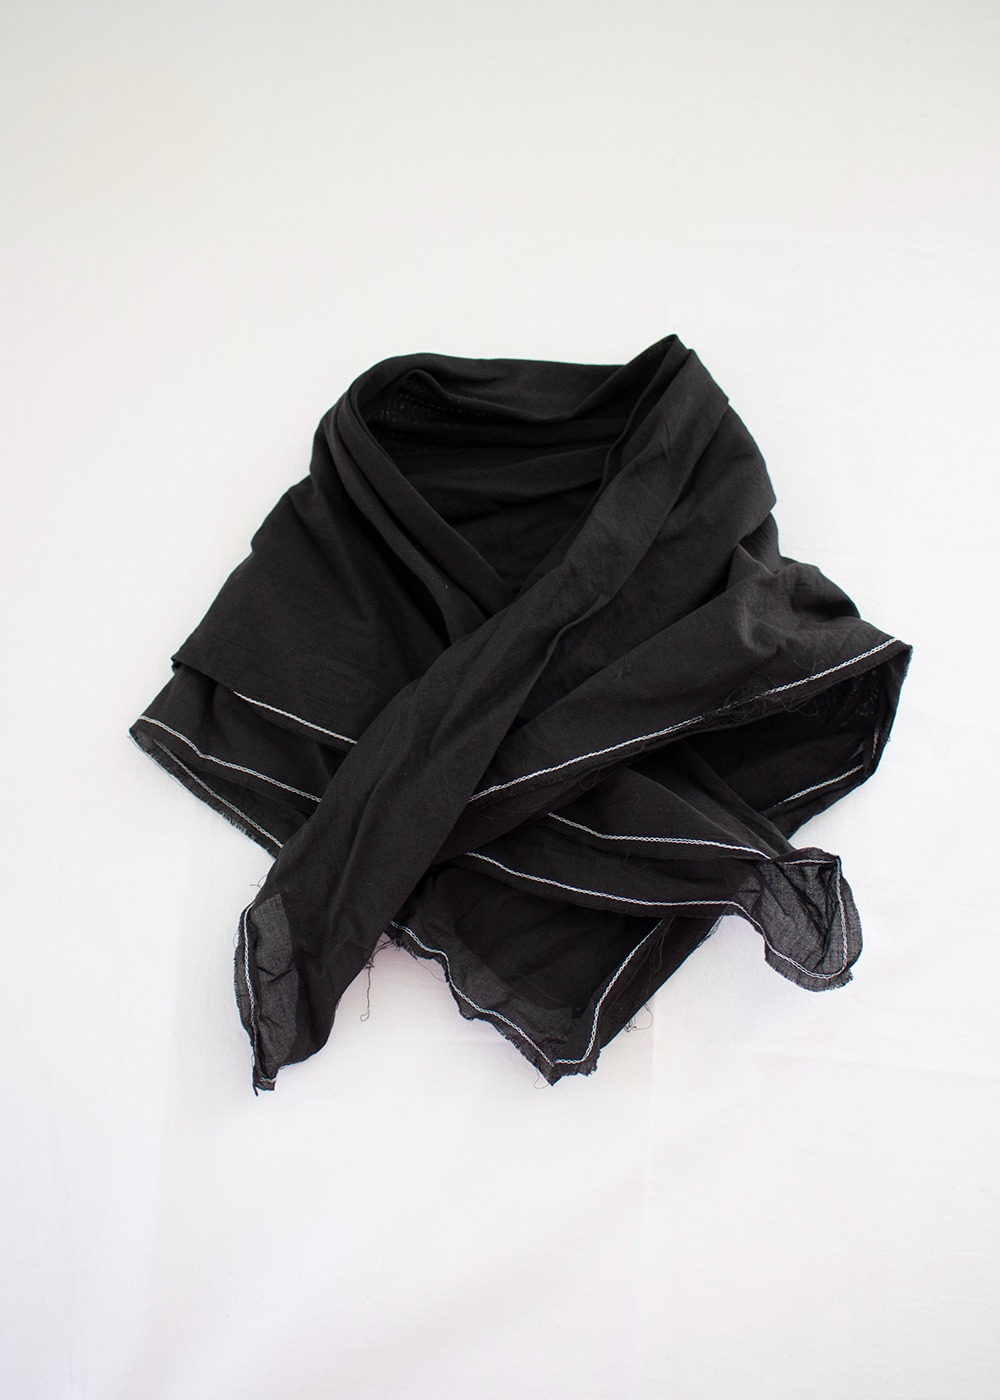 Giulietta Small Headscarf - Charcoal Black / Off White